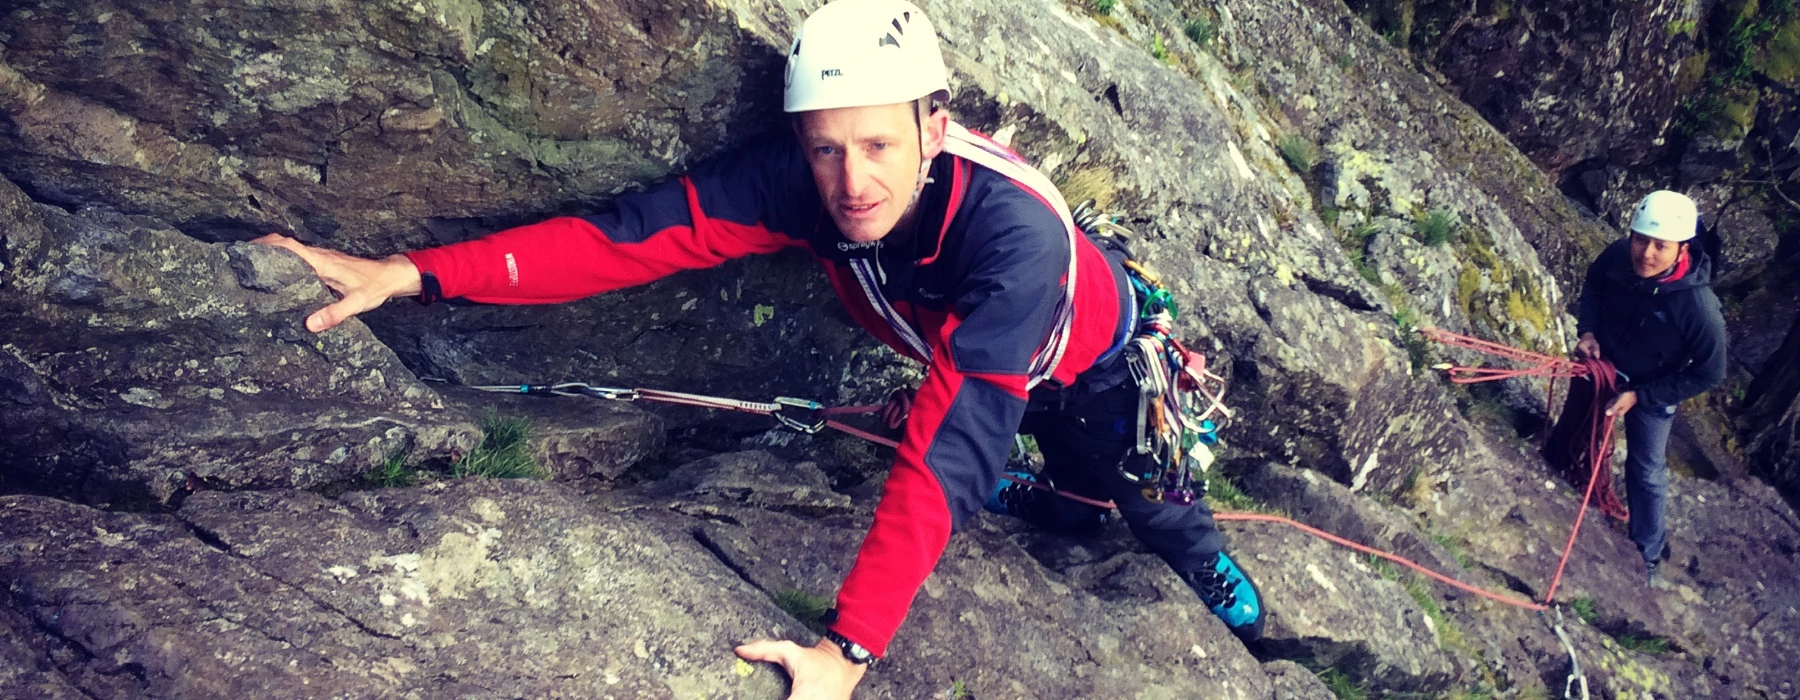 Lake District Rock Climbing Improver Course